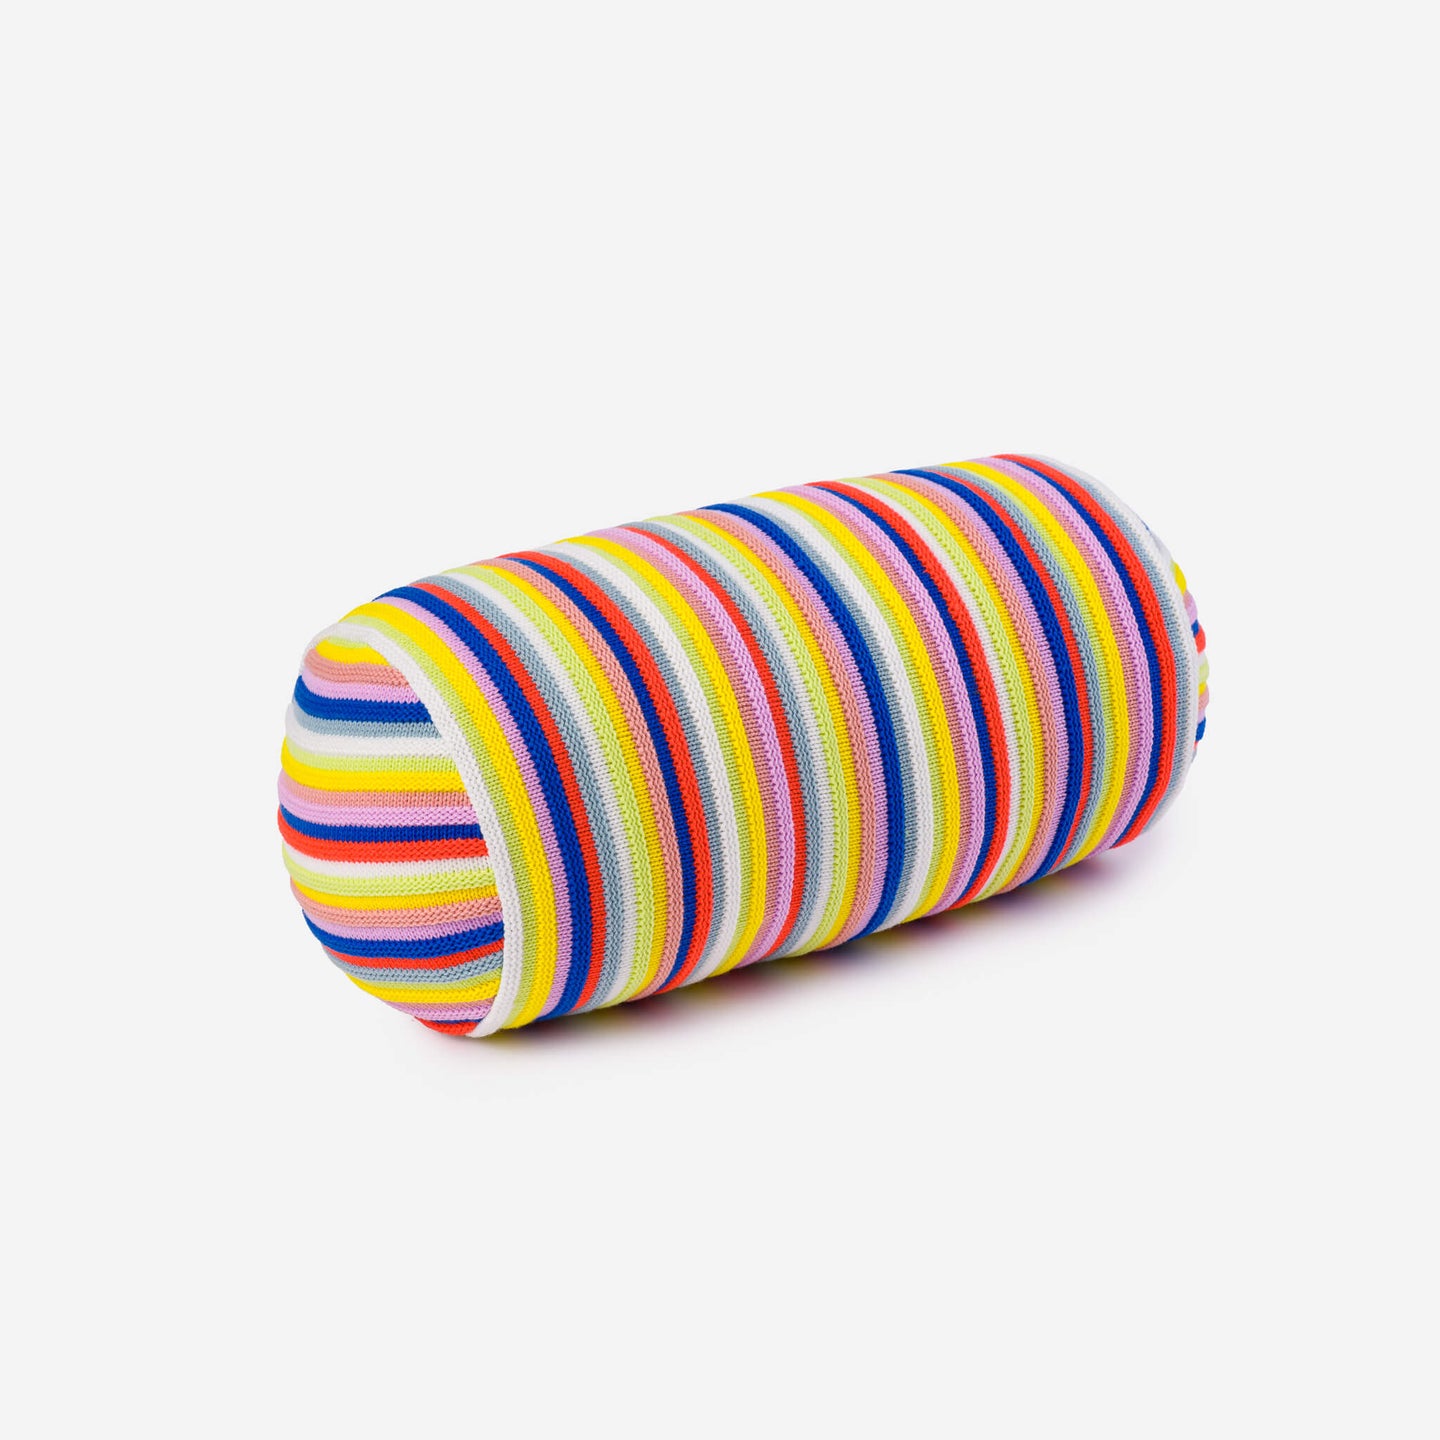 Circus Stripe Bolster Pillow